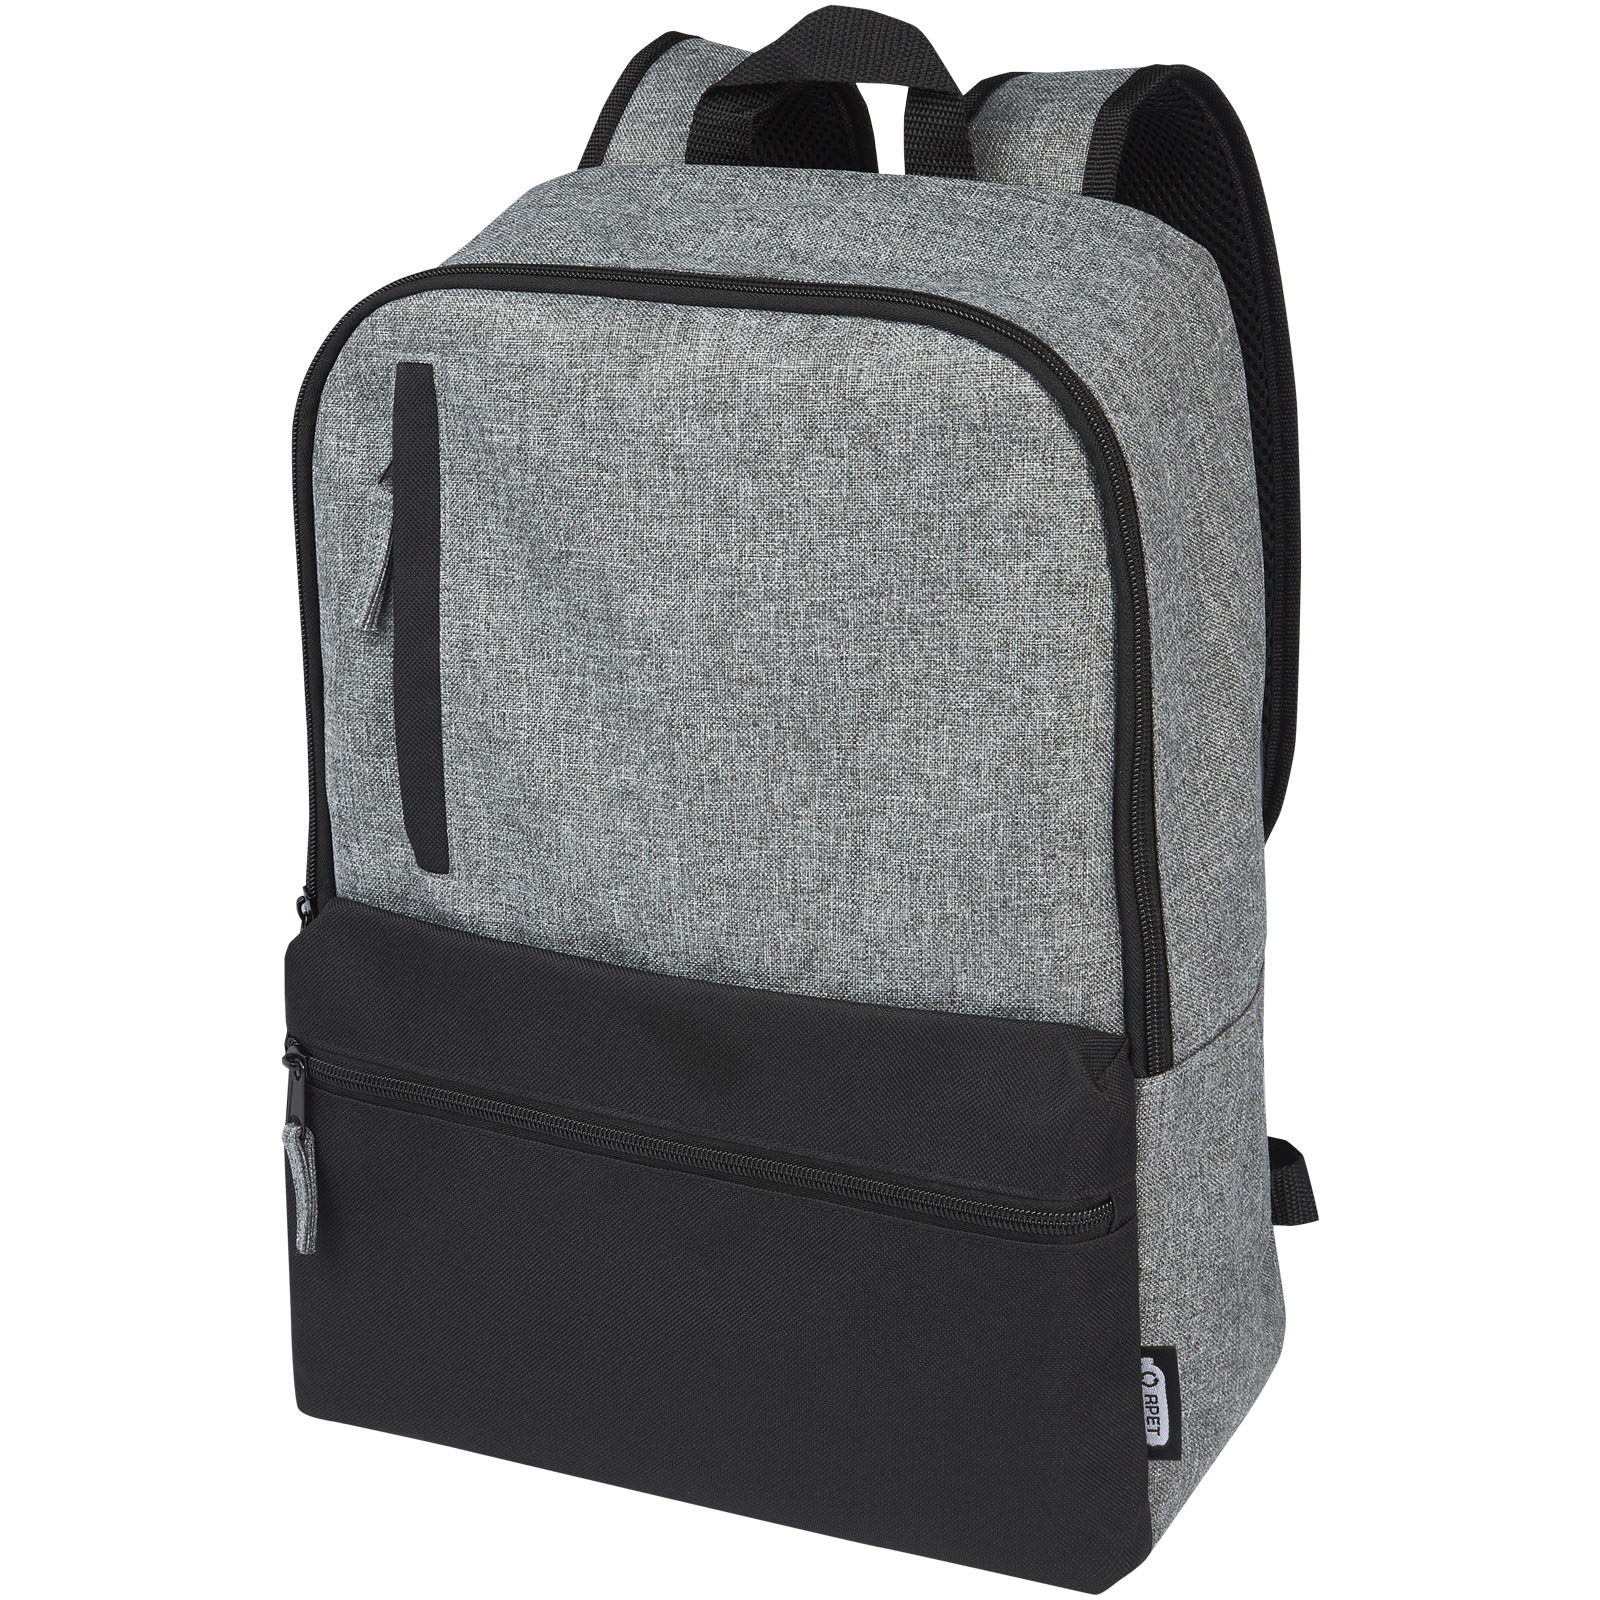 15" laptop backpack RECLAIM, 14 l - solid black / heather grey